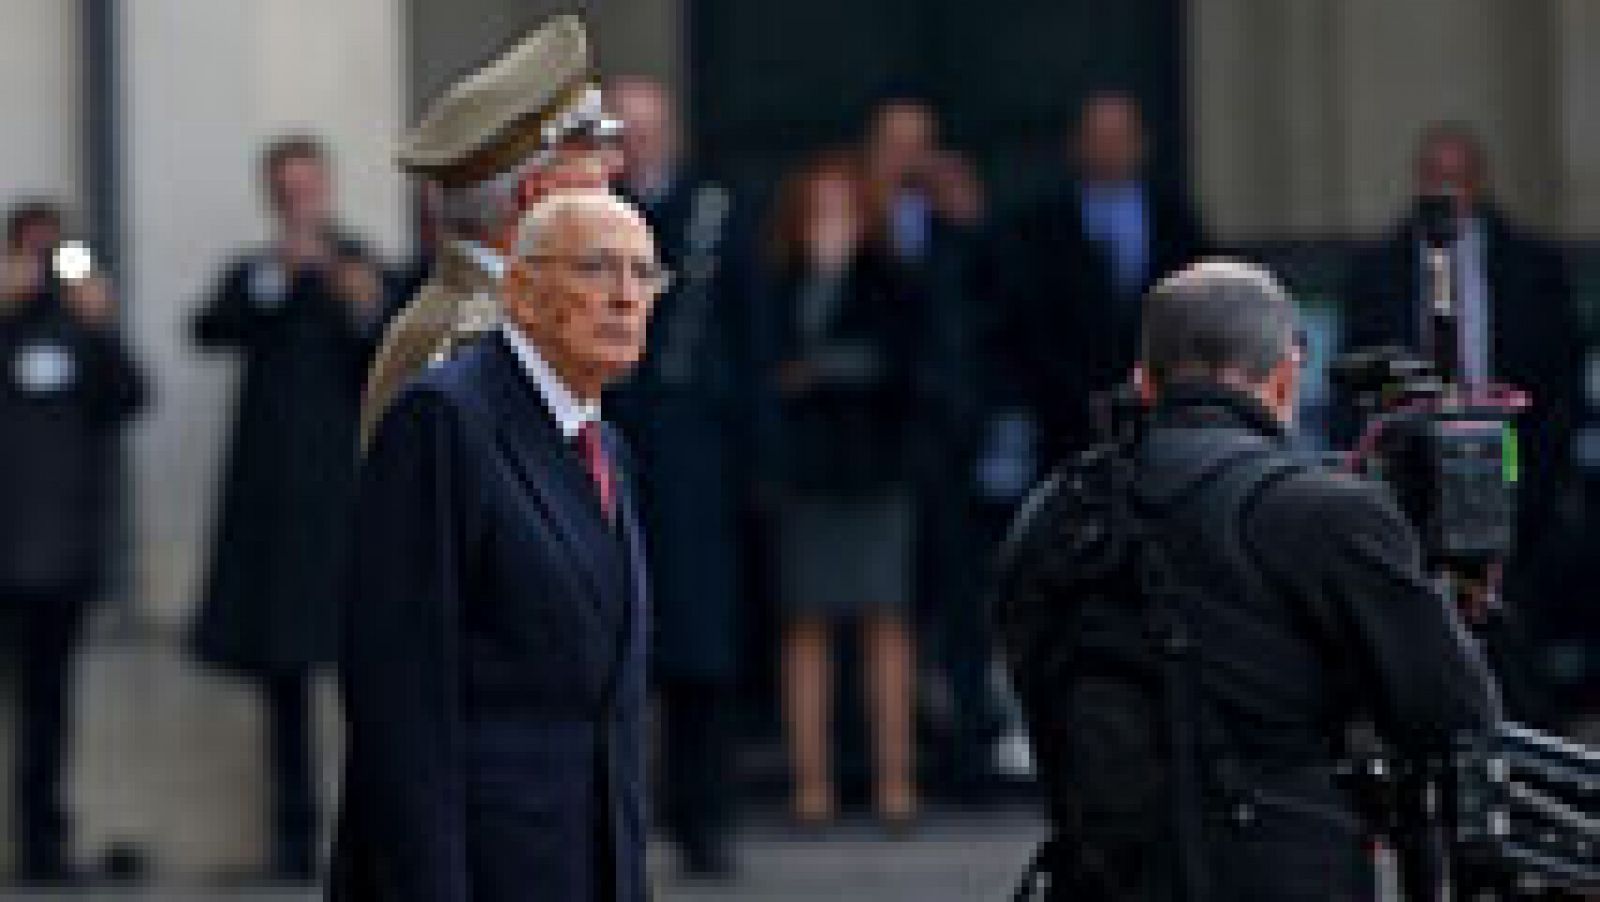    Napolitano dimite como presidente de Italia tras casi nueve a   Napolitano dimite como presidente de Italia tras casi nueve años en el cargo